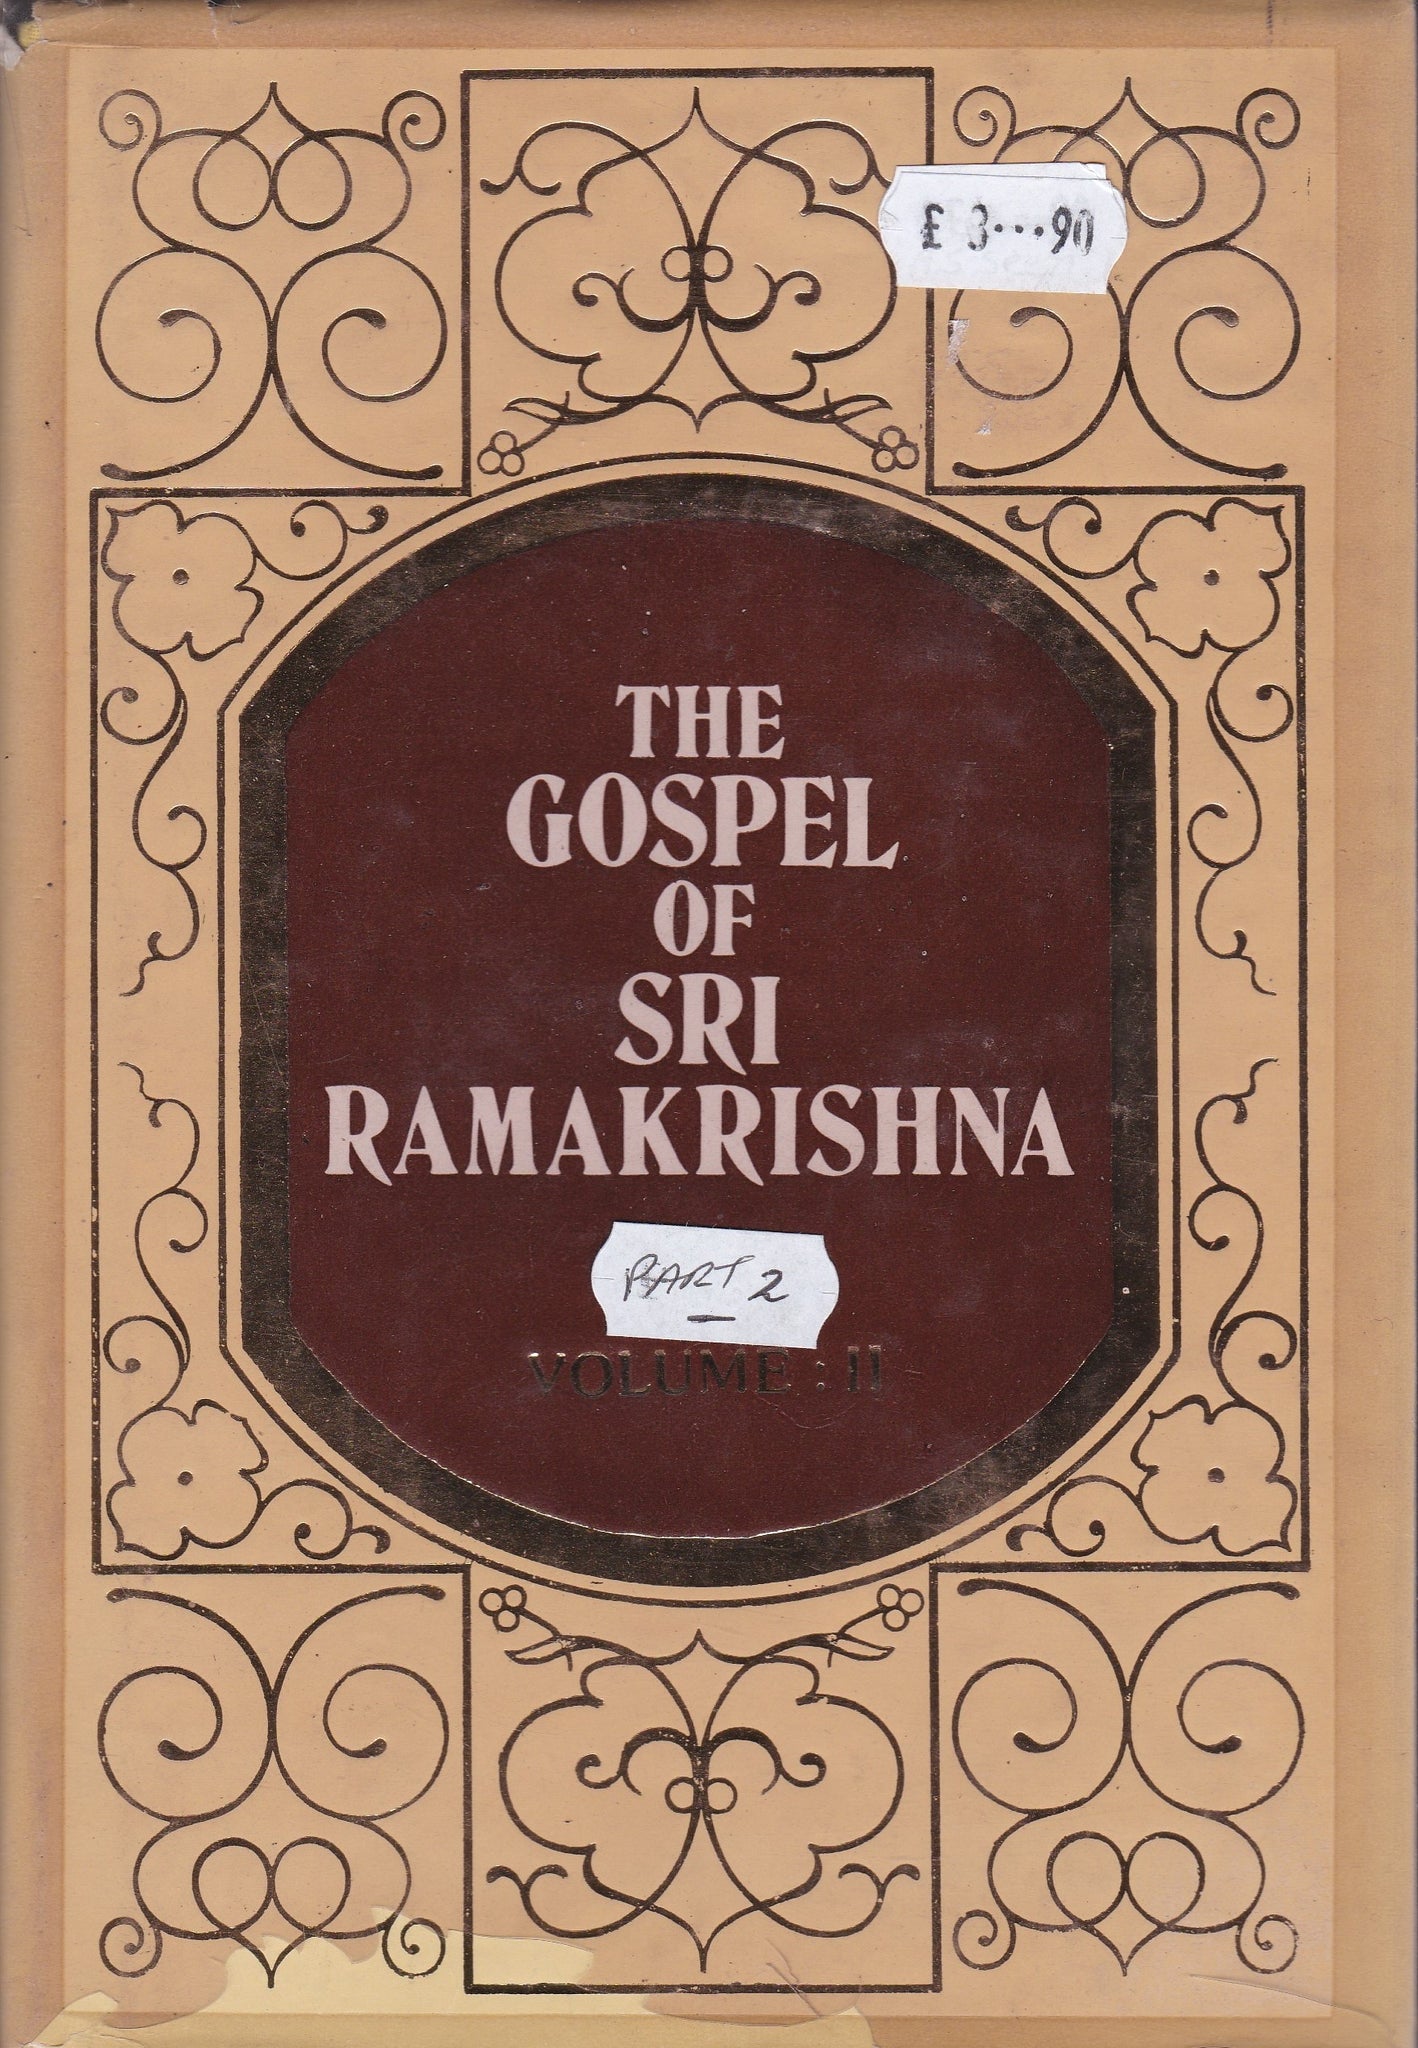 The Gospel of Sri Ramkrishna - Part 2 only